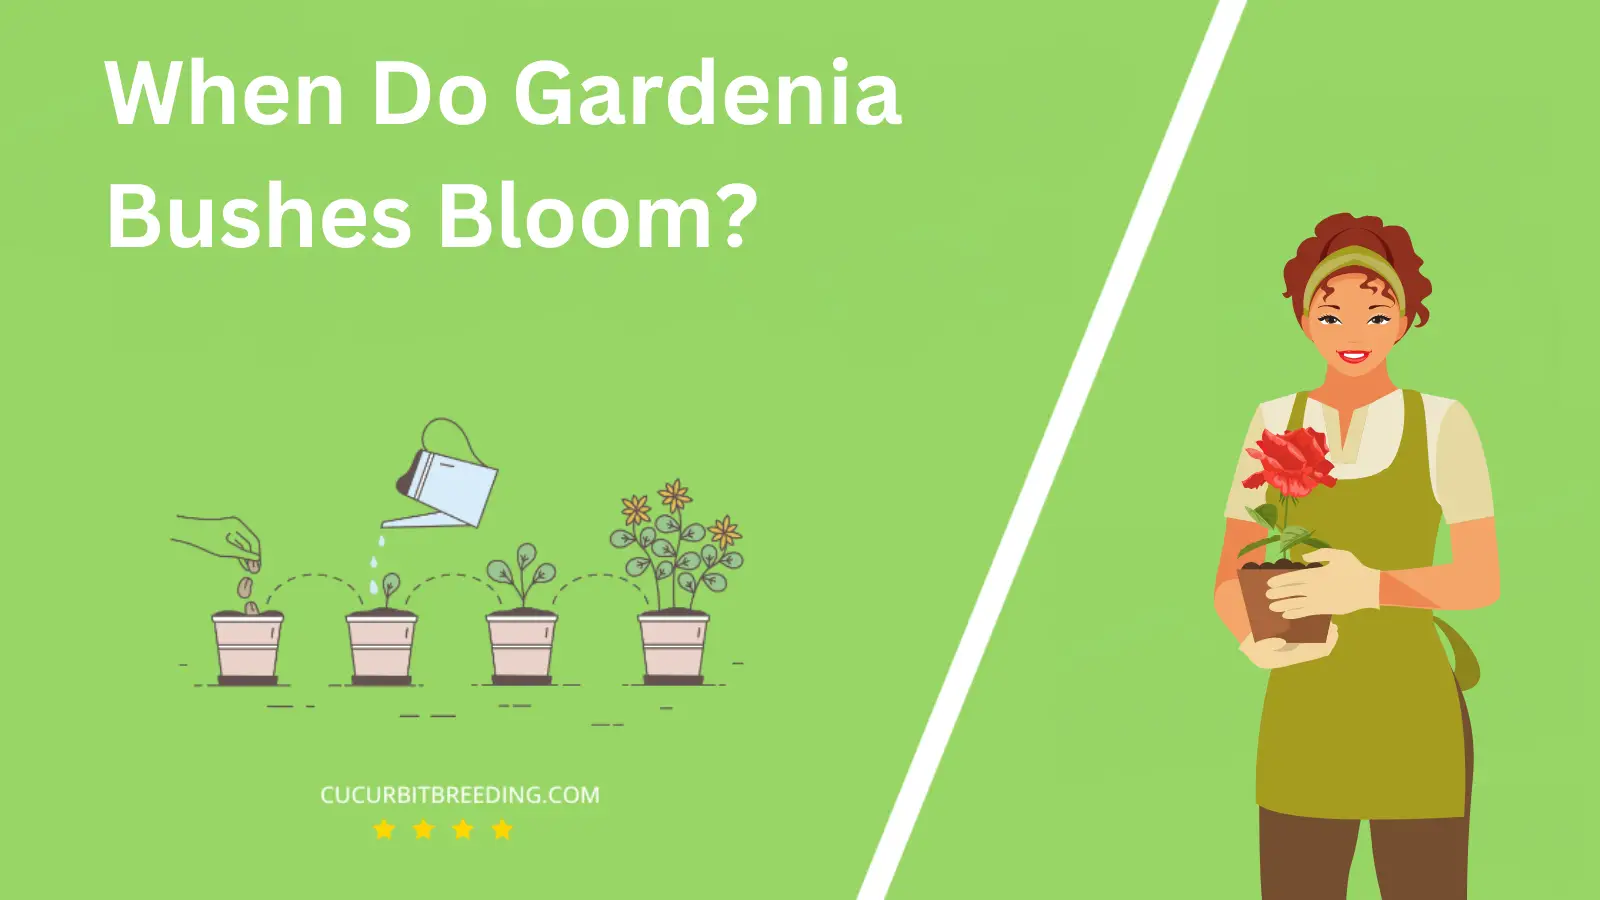 When Do Gardenia Bushes Bloom?